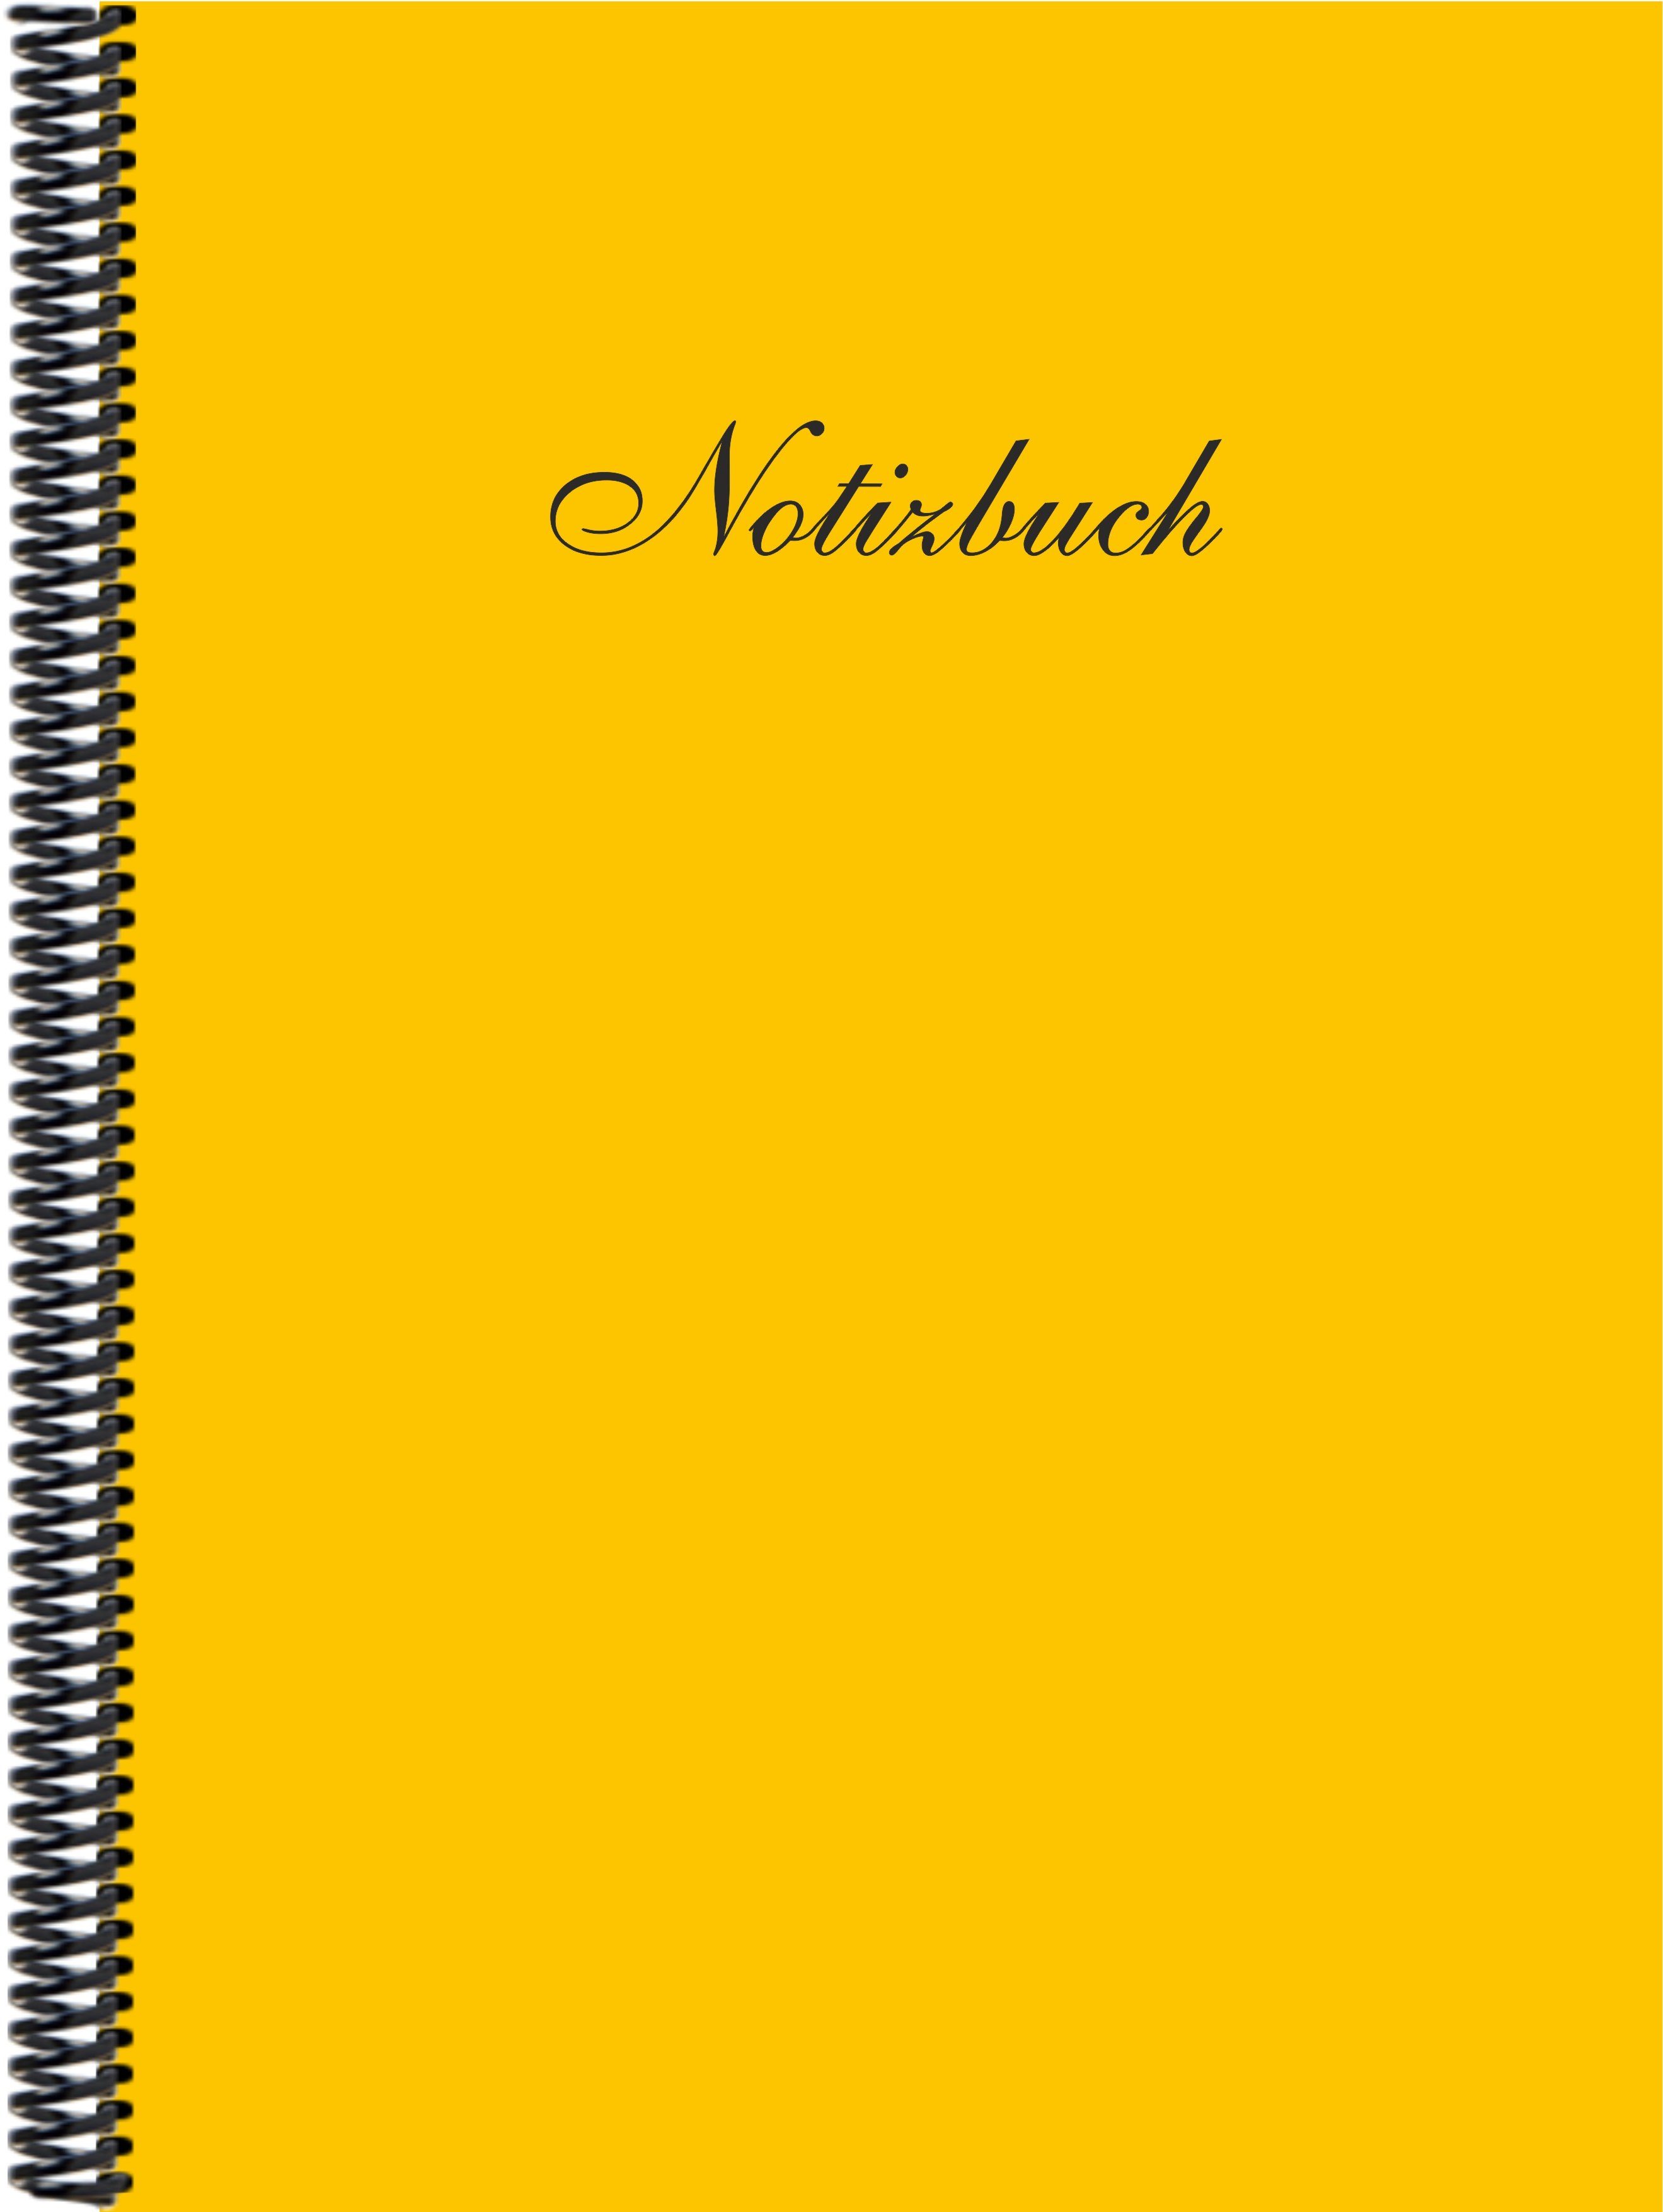 Gmbh Notizbuch goldgelb in E&Z Trendfarbe der blanko, Notizbuch DINA4 Verlag